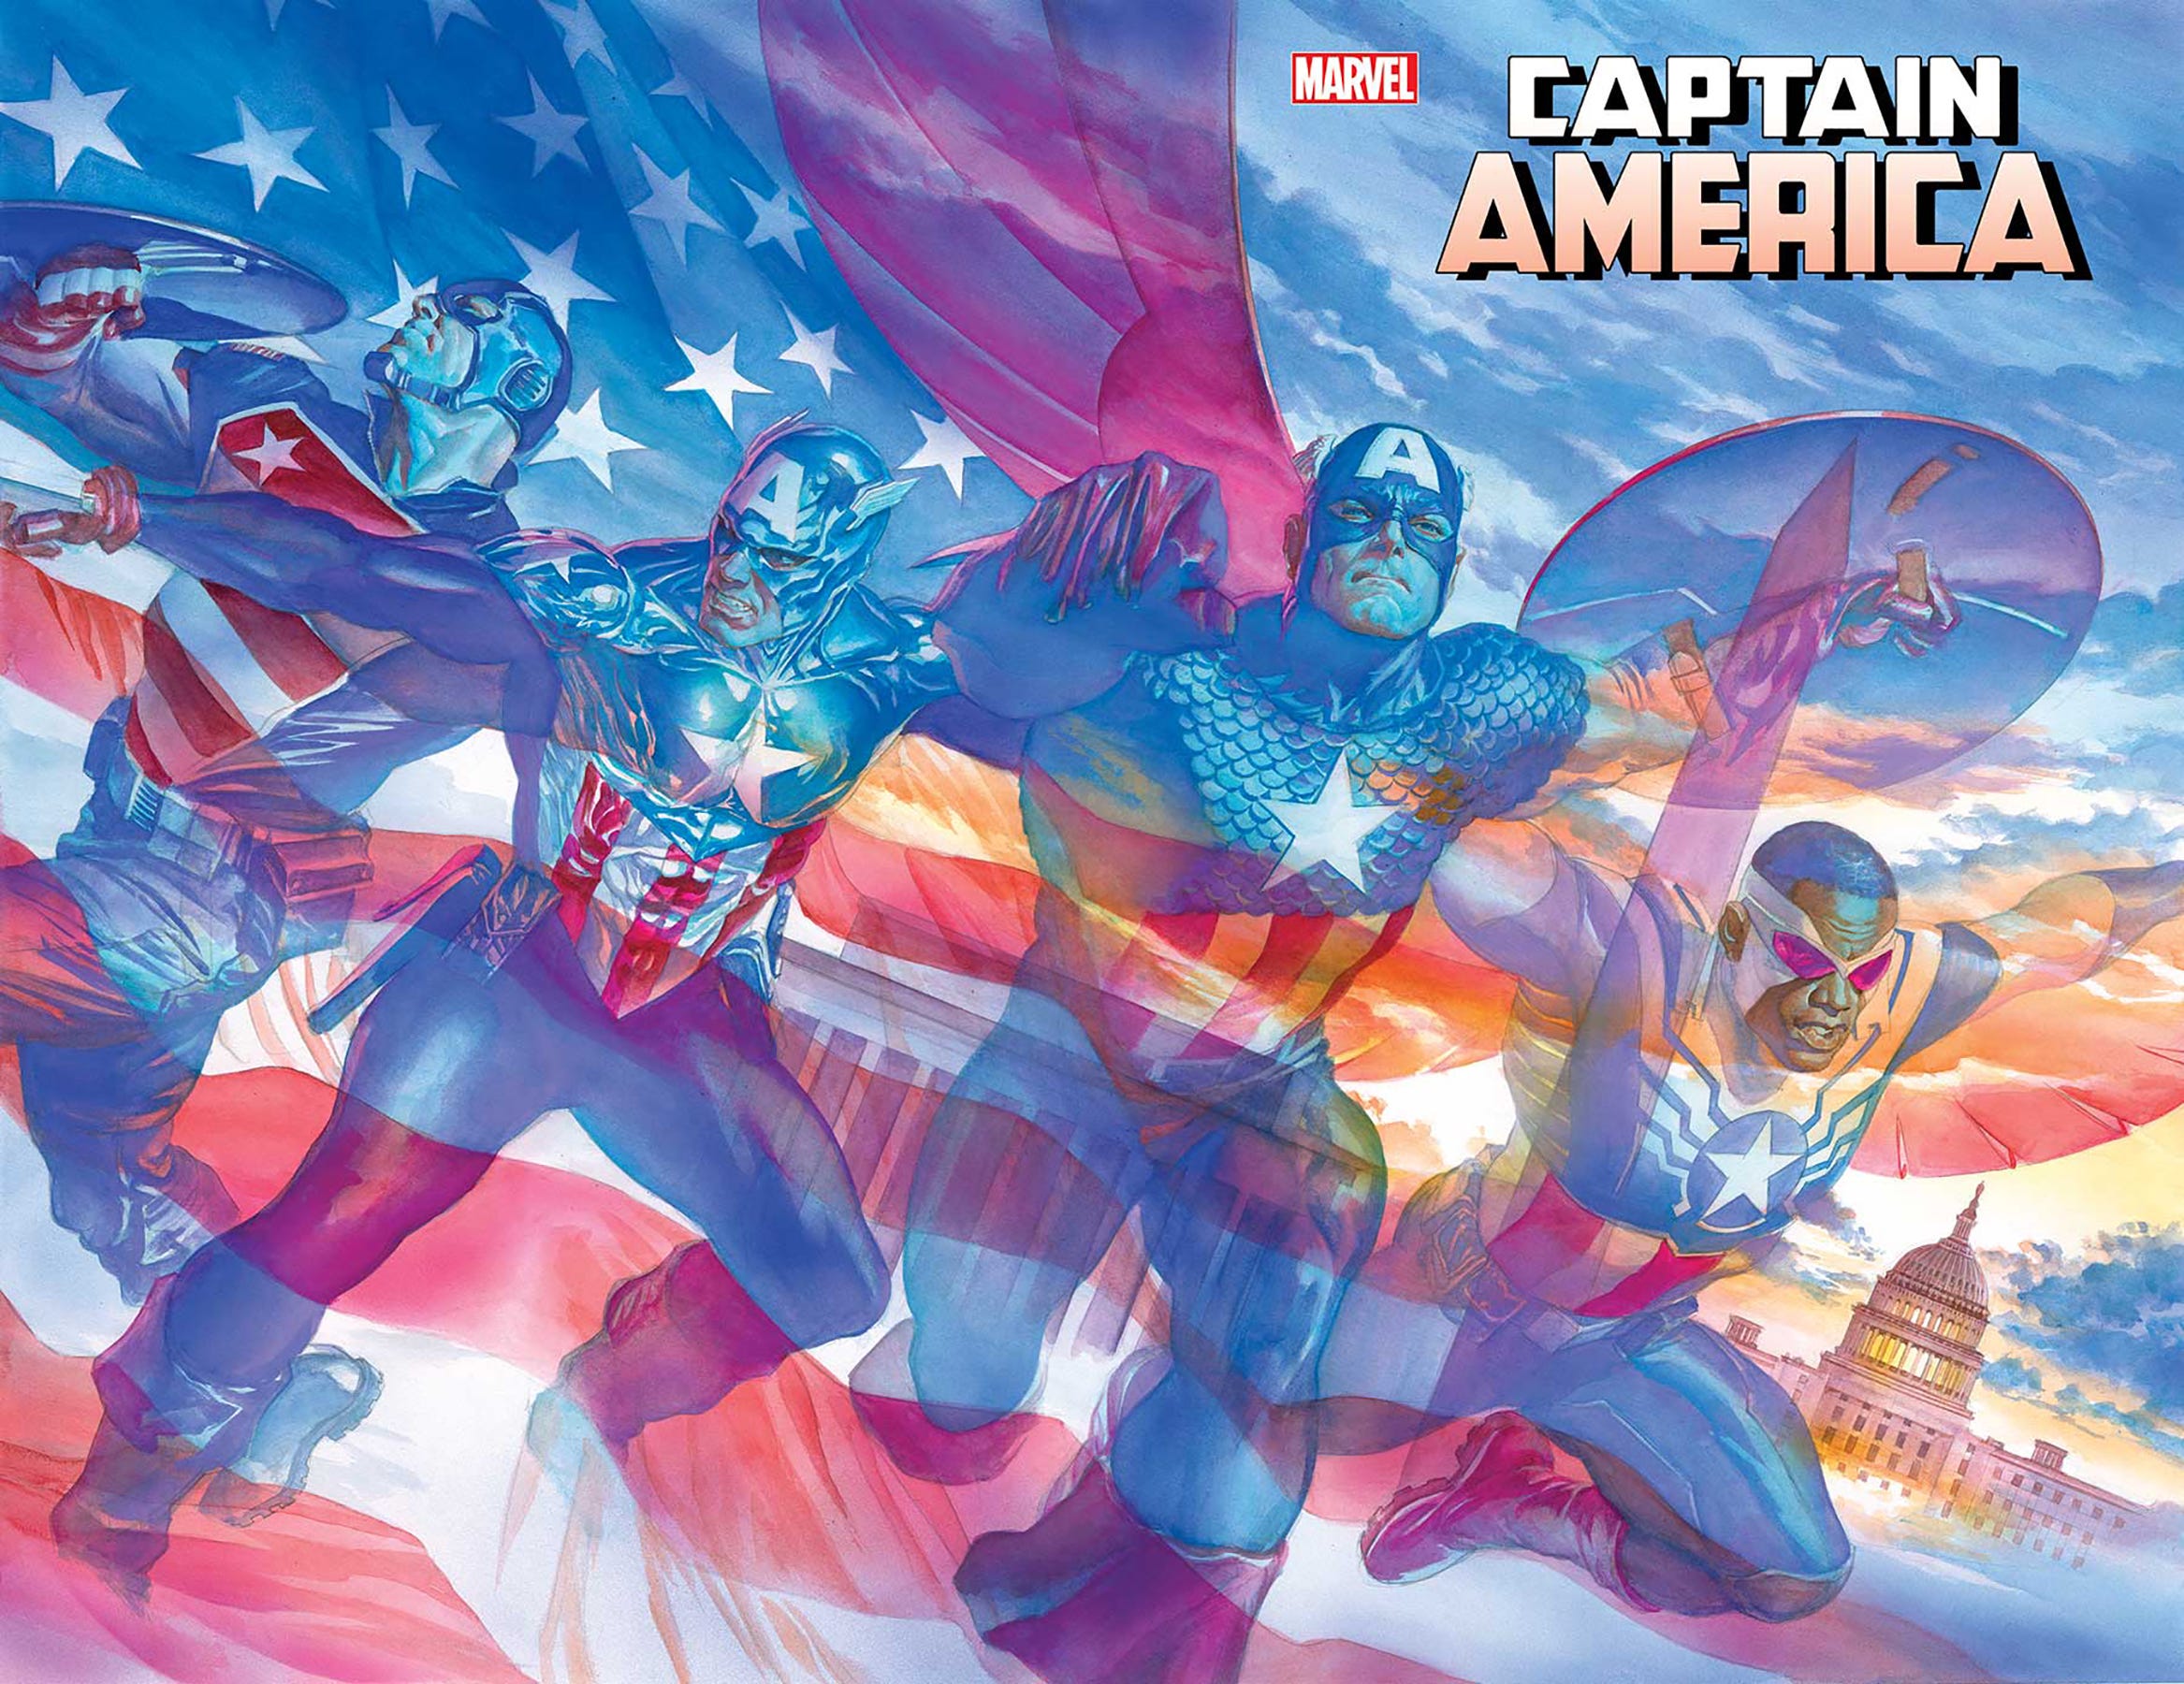 United States Captain America #1 (of 5)